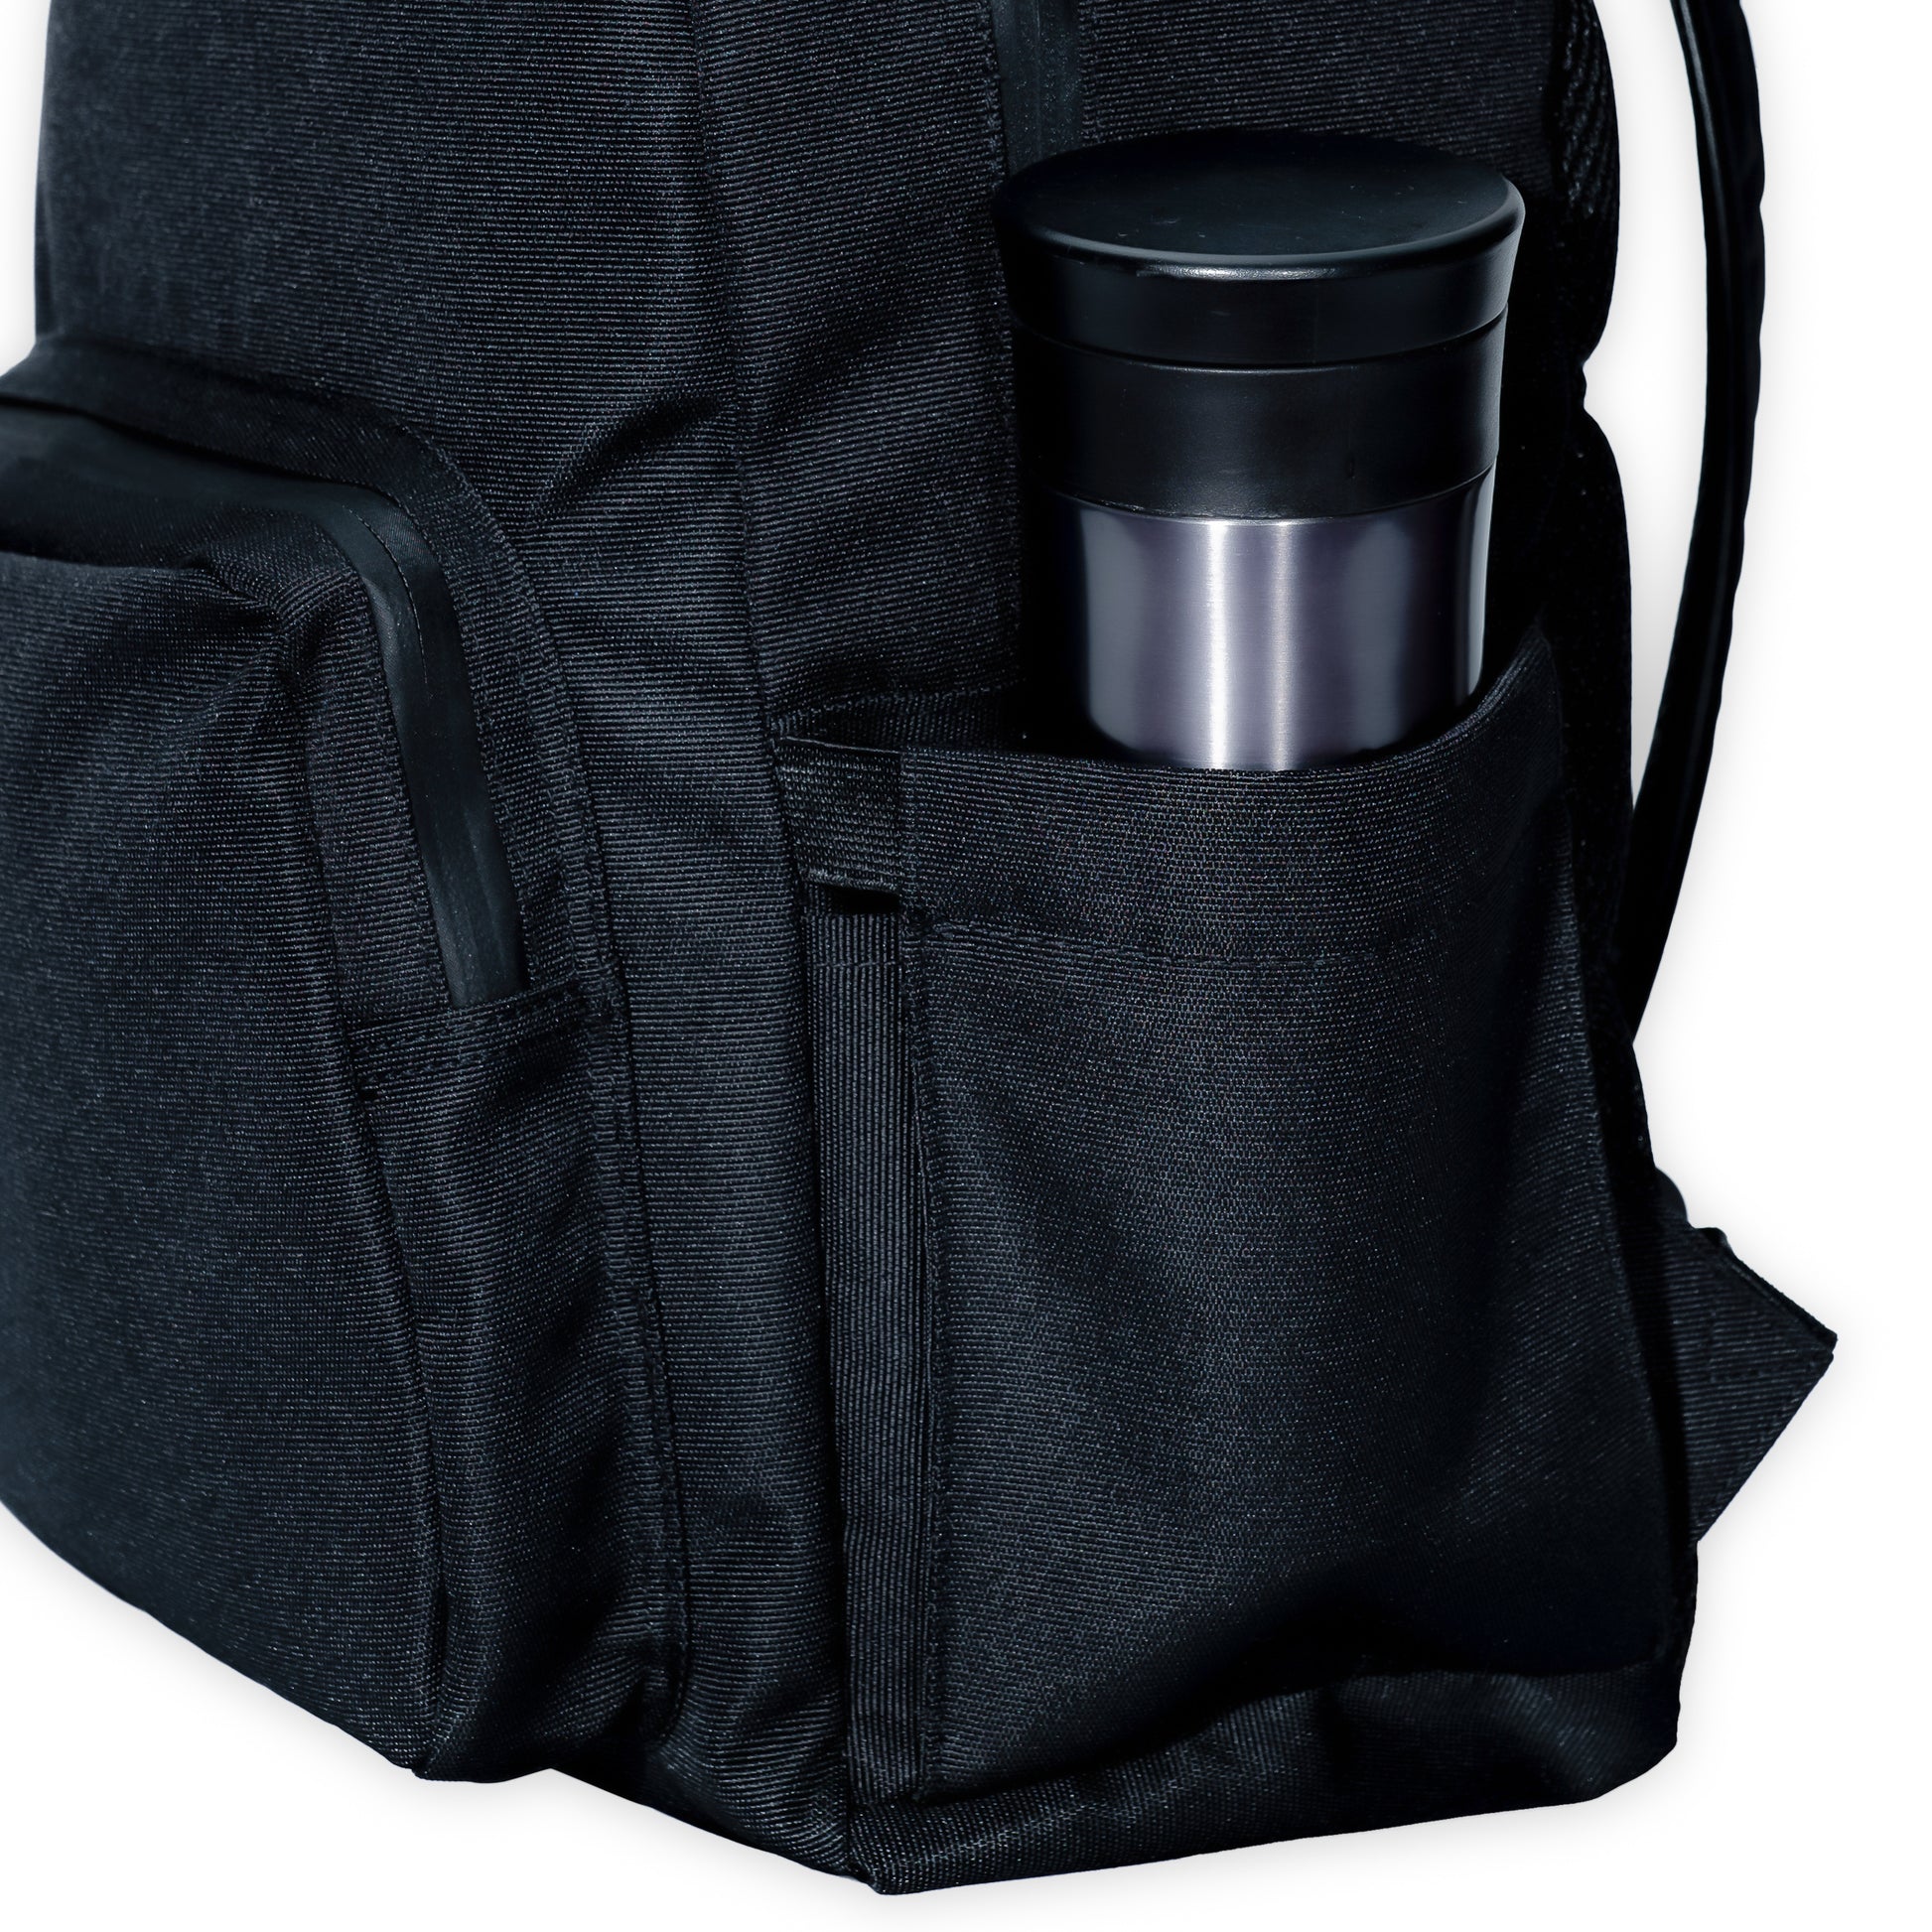 black backpack with a water bottle pocket